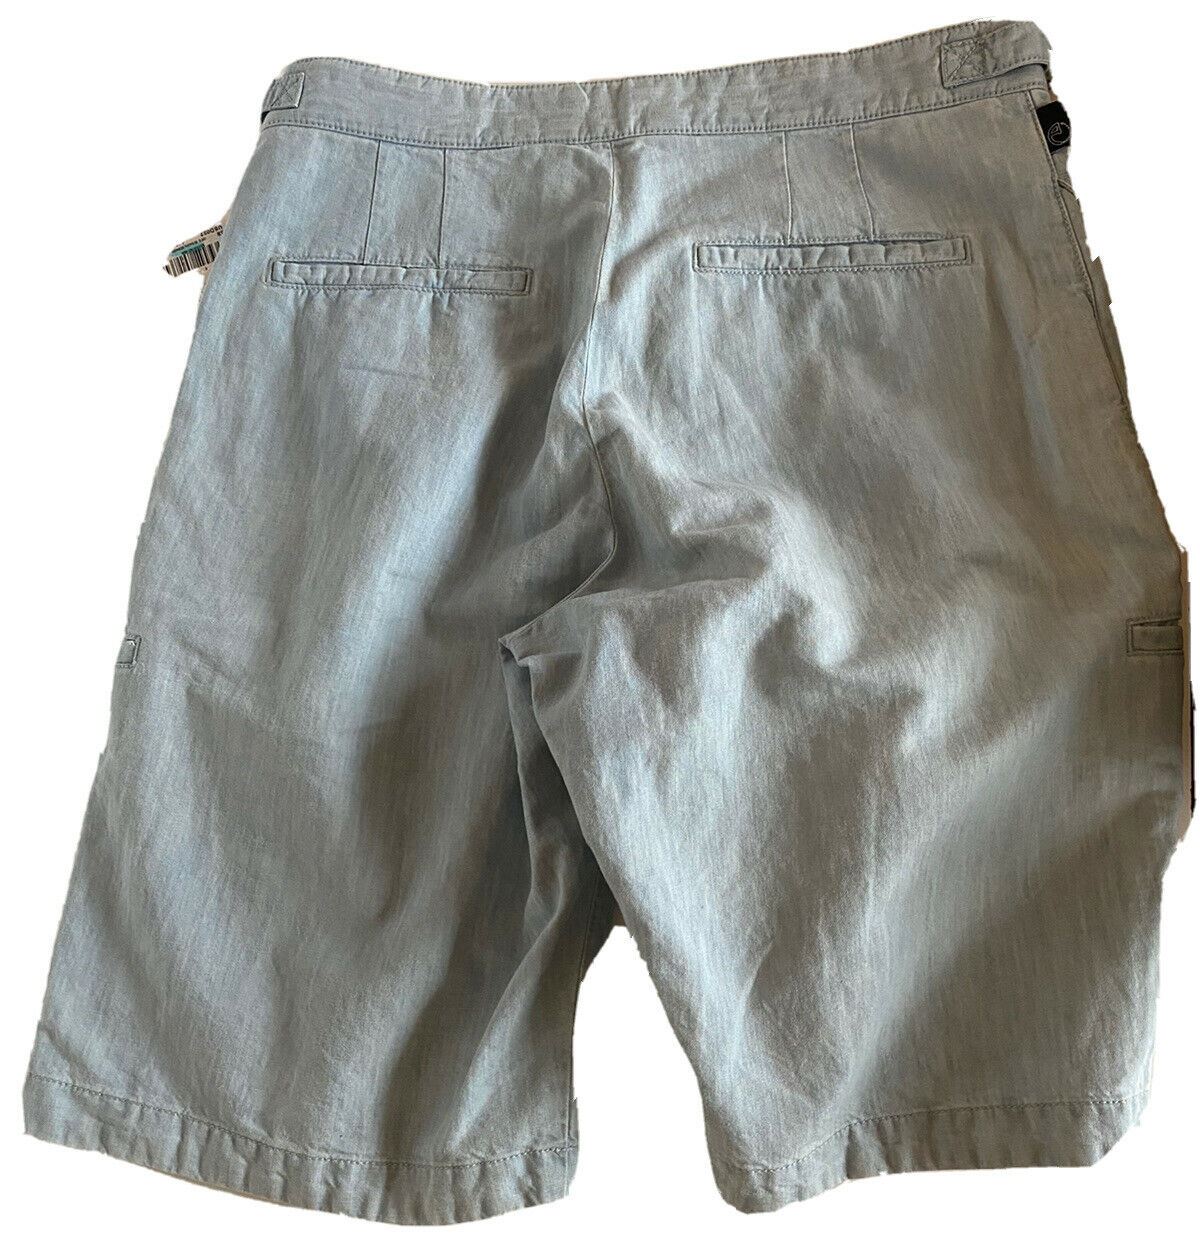 Neu mit Etikett: 495 $ Armani Collezioni Herren-Hellblau-Shorts, Größe 30 US (46 Eu) TCP82S